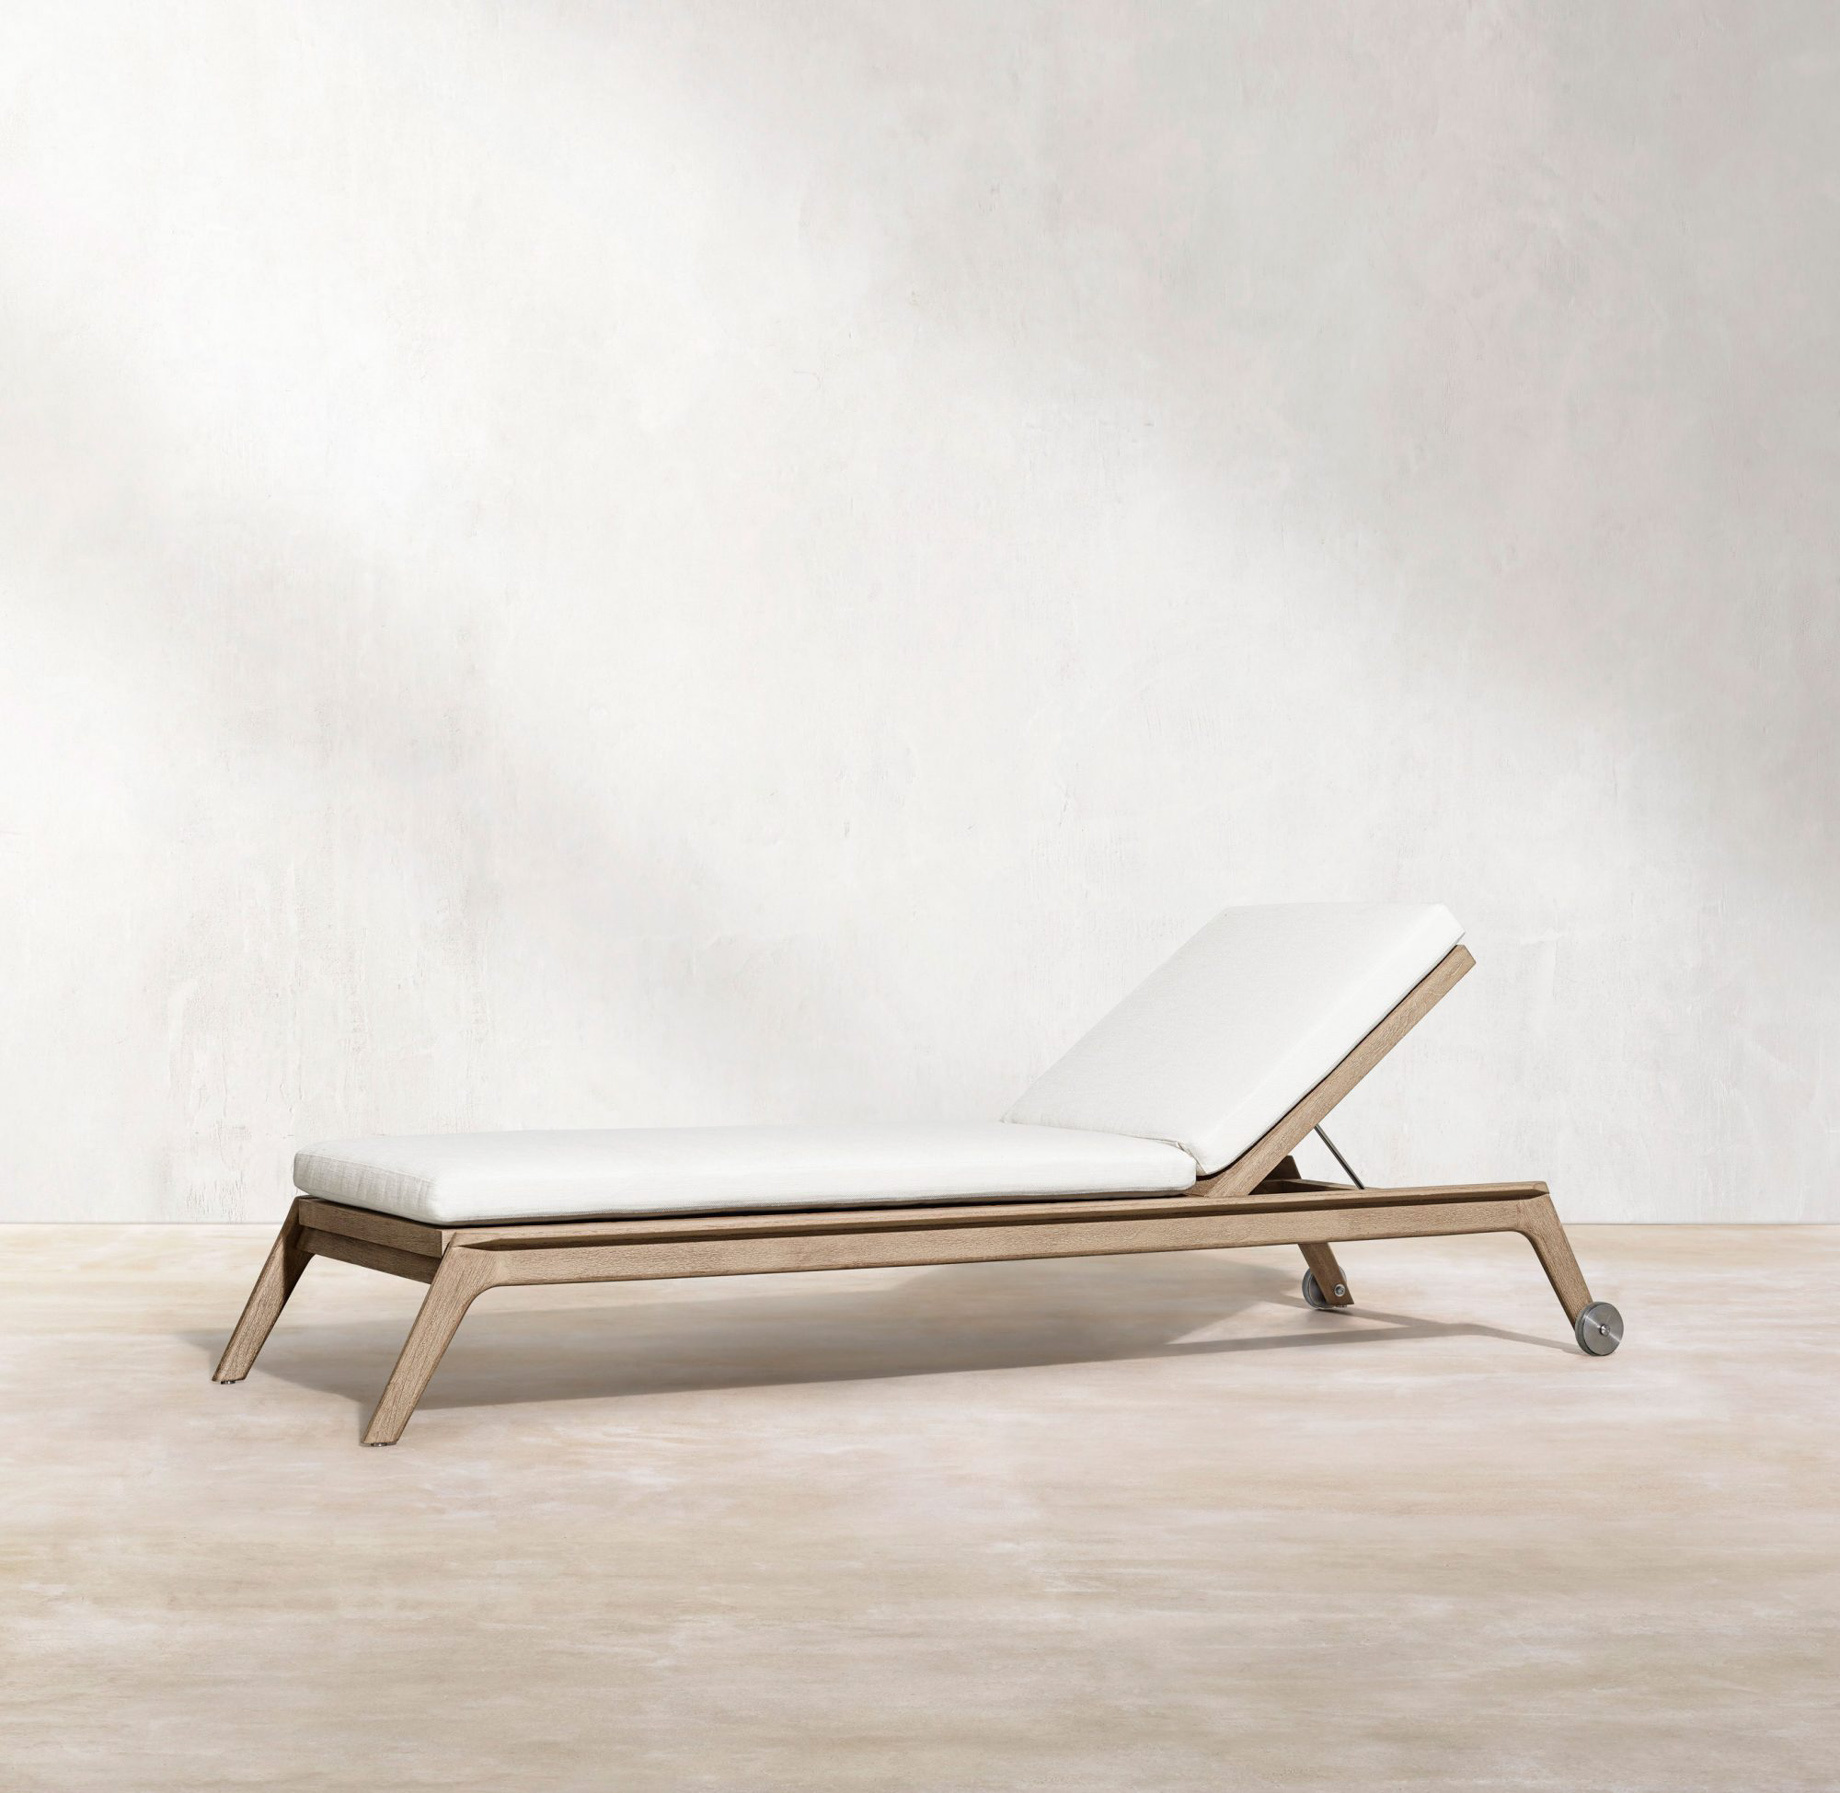 Malta Teak Collection Outdoor Furniture Design for RH – Ramon Esteve – Malta Teak Lounge Chaise